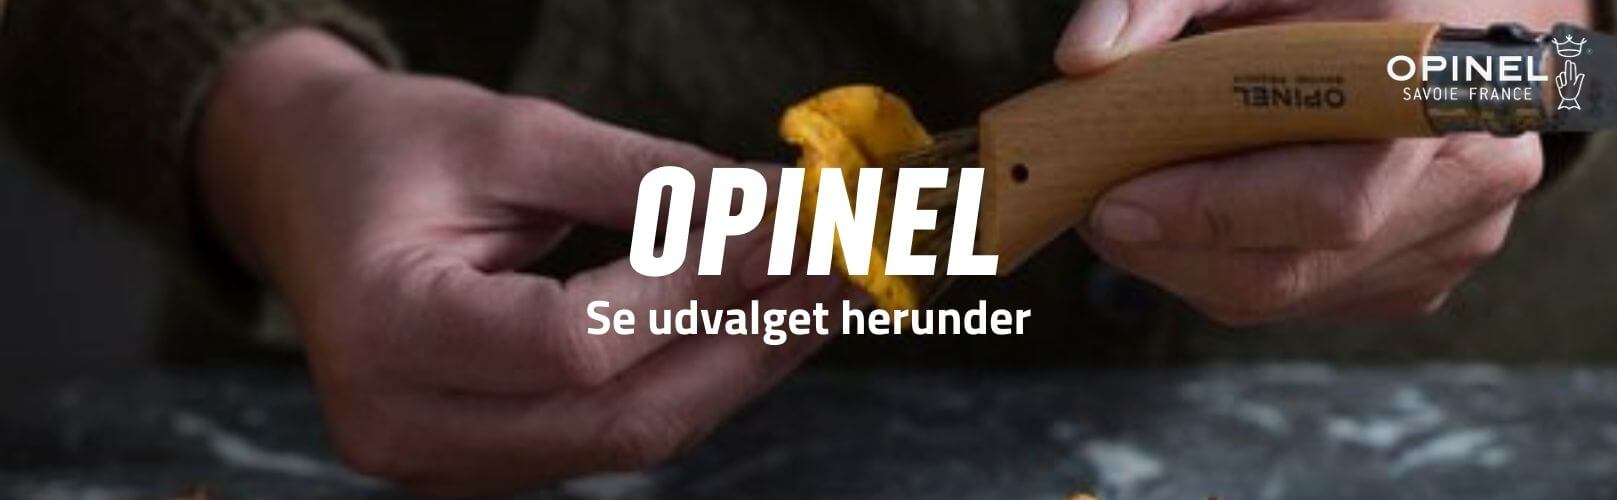 Opinel brand banner